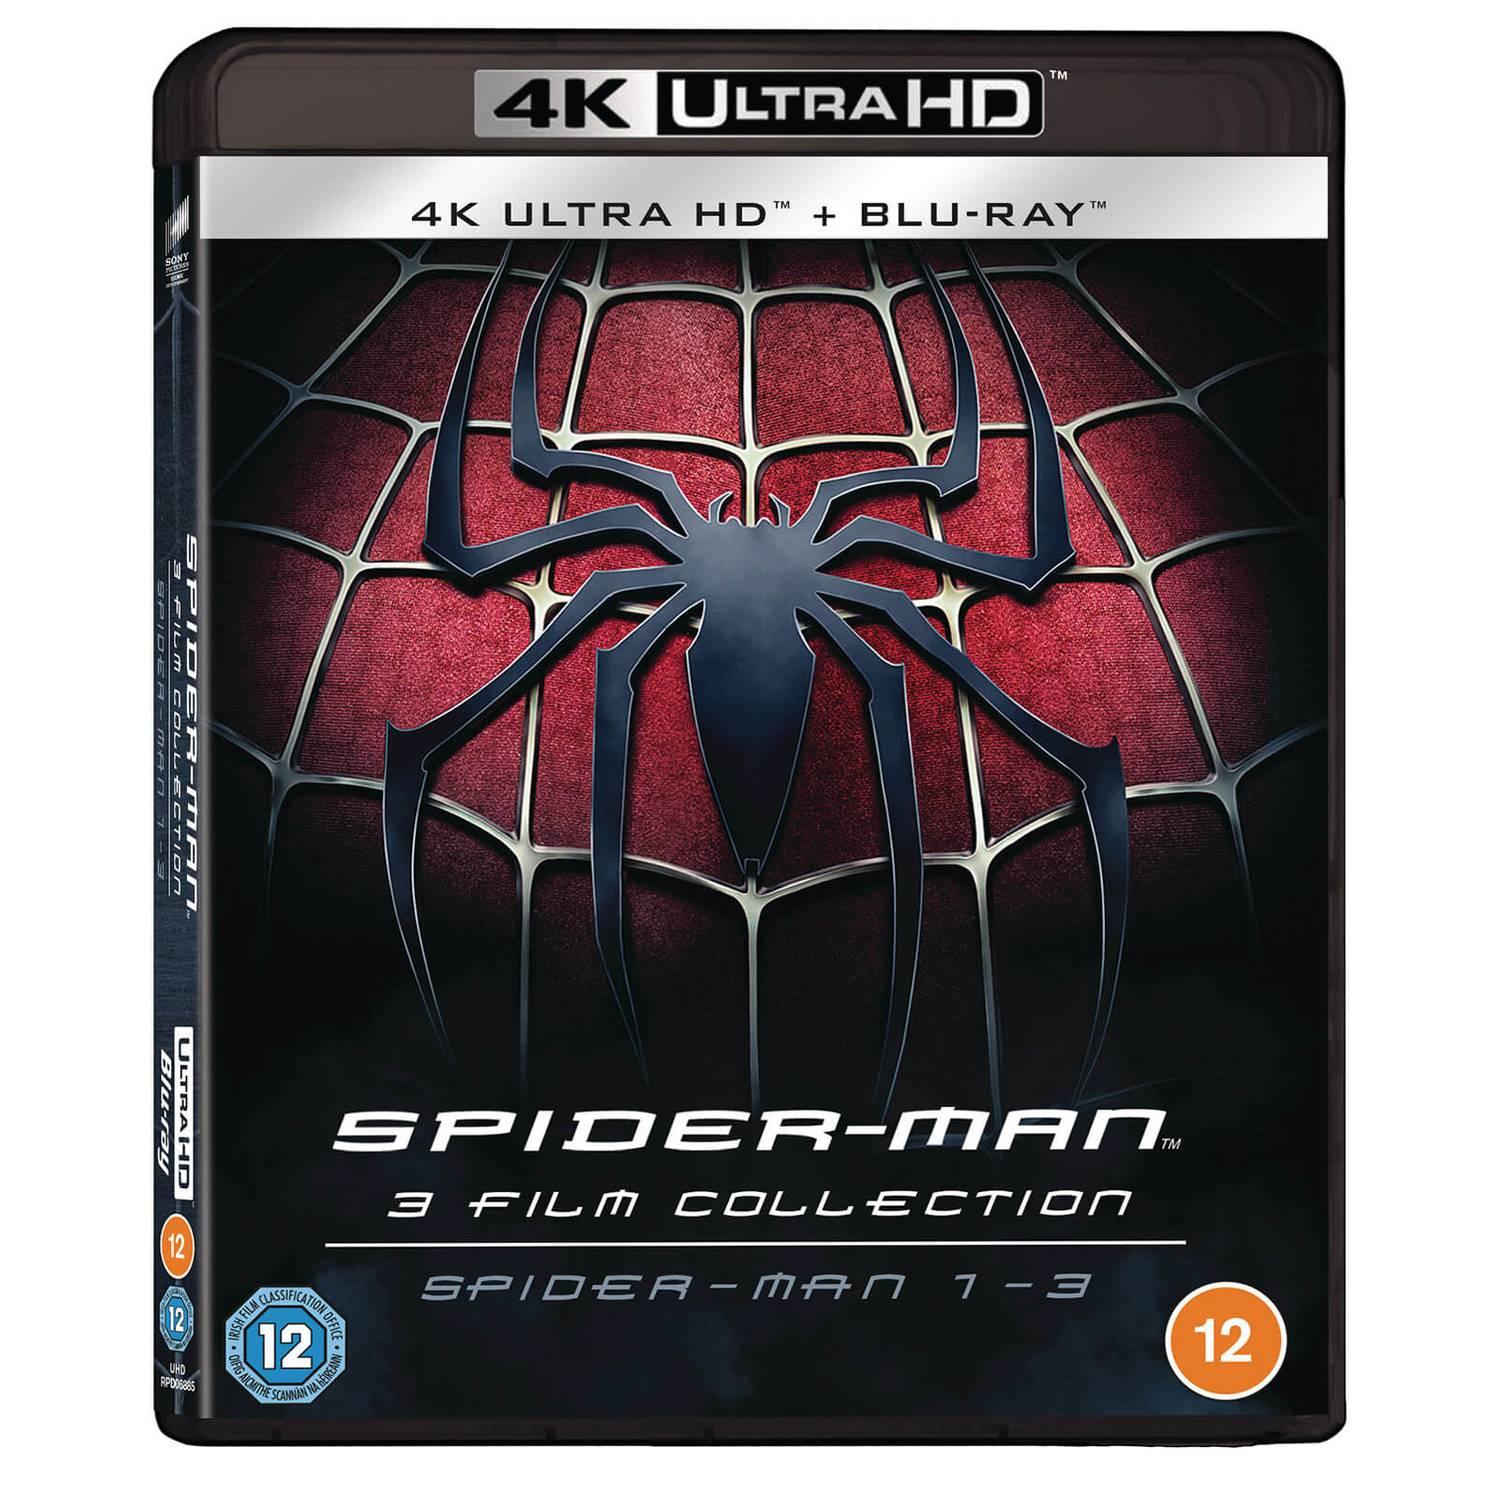 Spider-Man: 3 Film Collection (2002-2007) (4K UHD + Blu-ray)